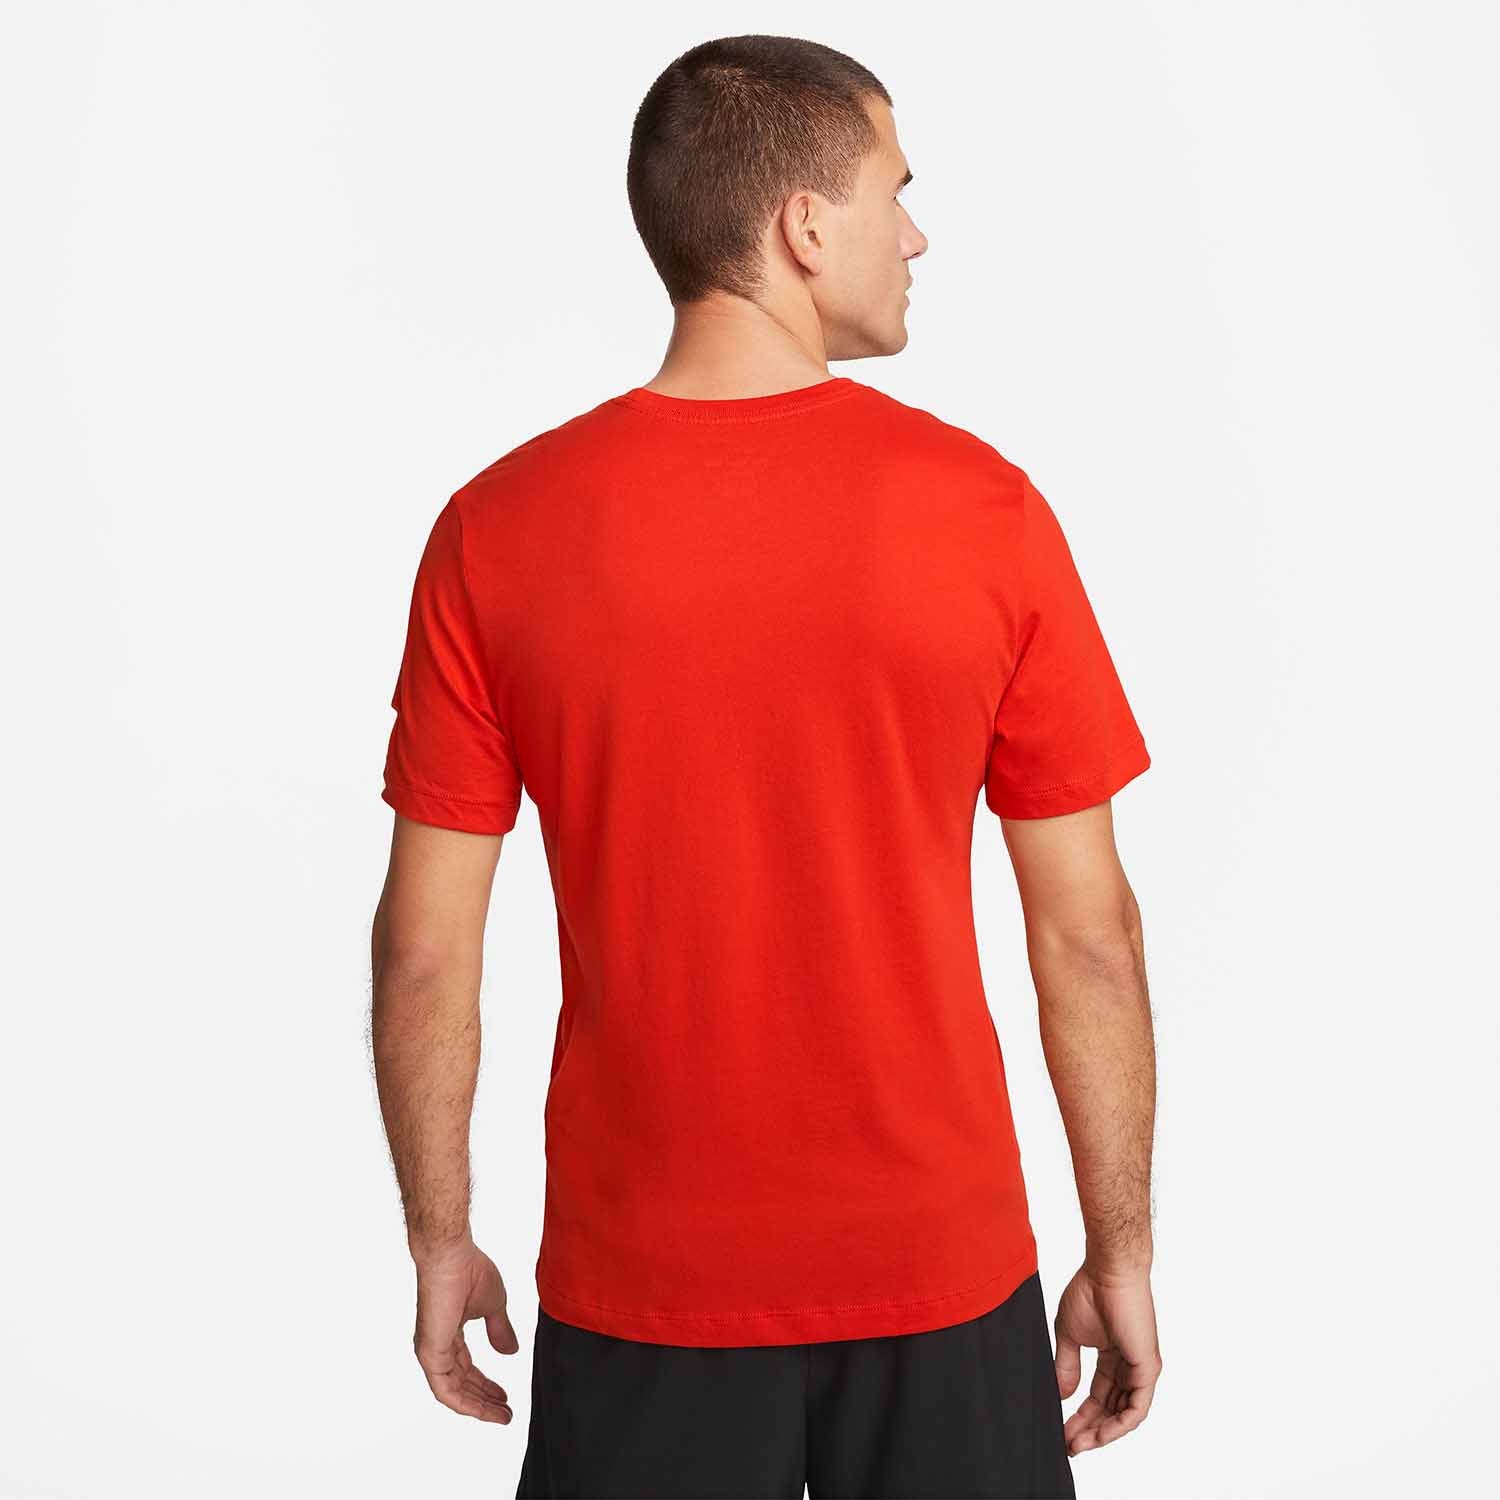 Nike Dri-Fit Body Shop T-Shirt